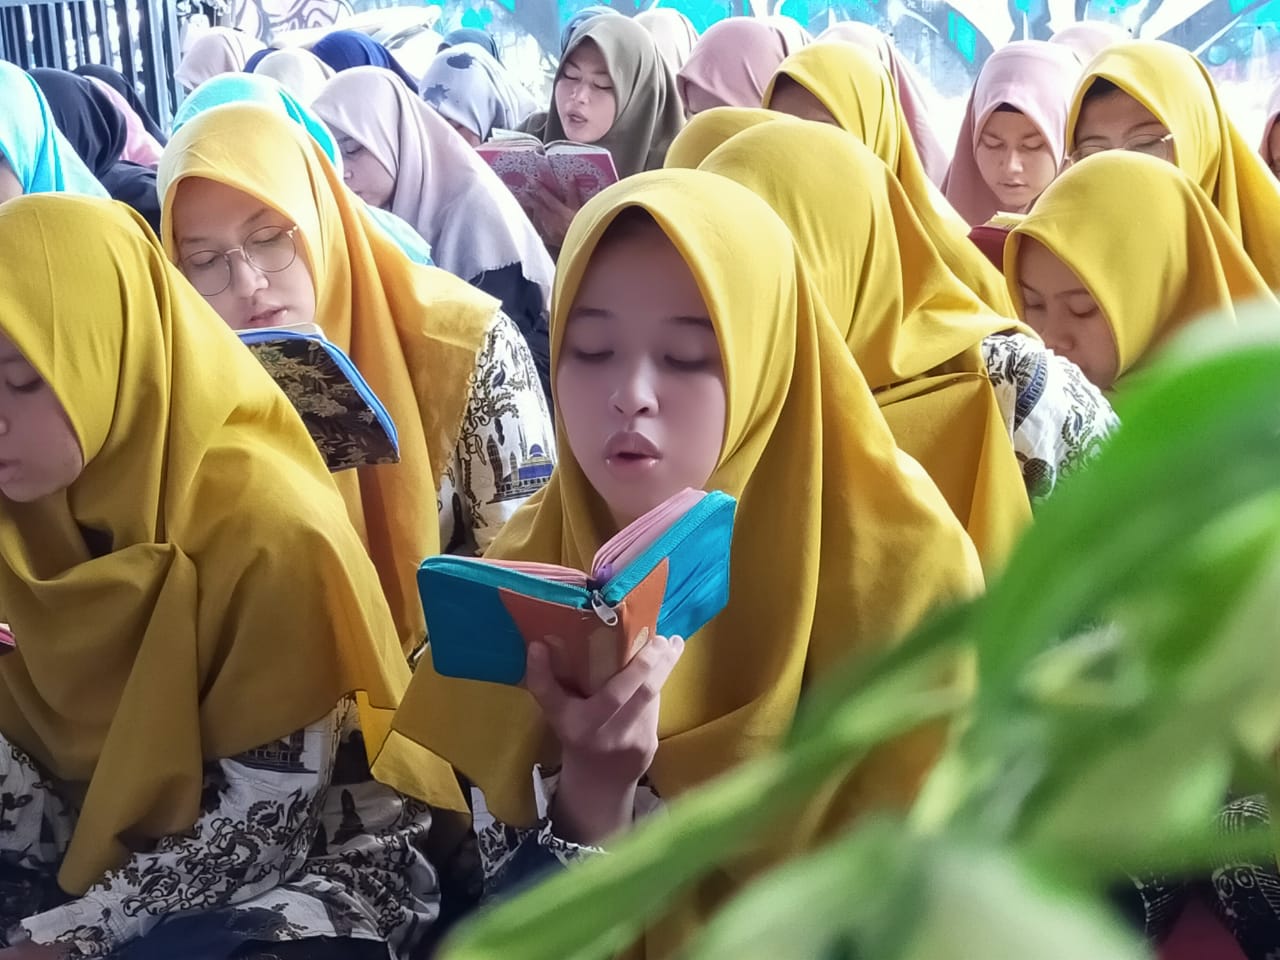 Sambut Milad, PPPA Daarul Qur'an Semarang Gelar Khataman